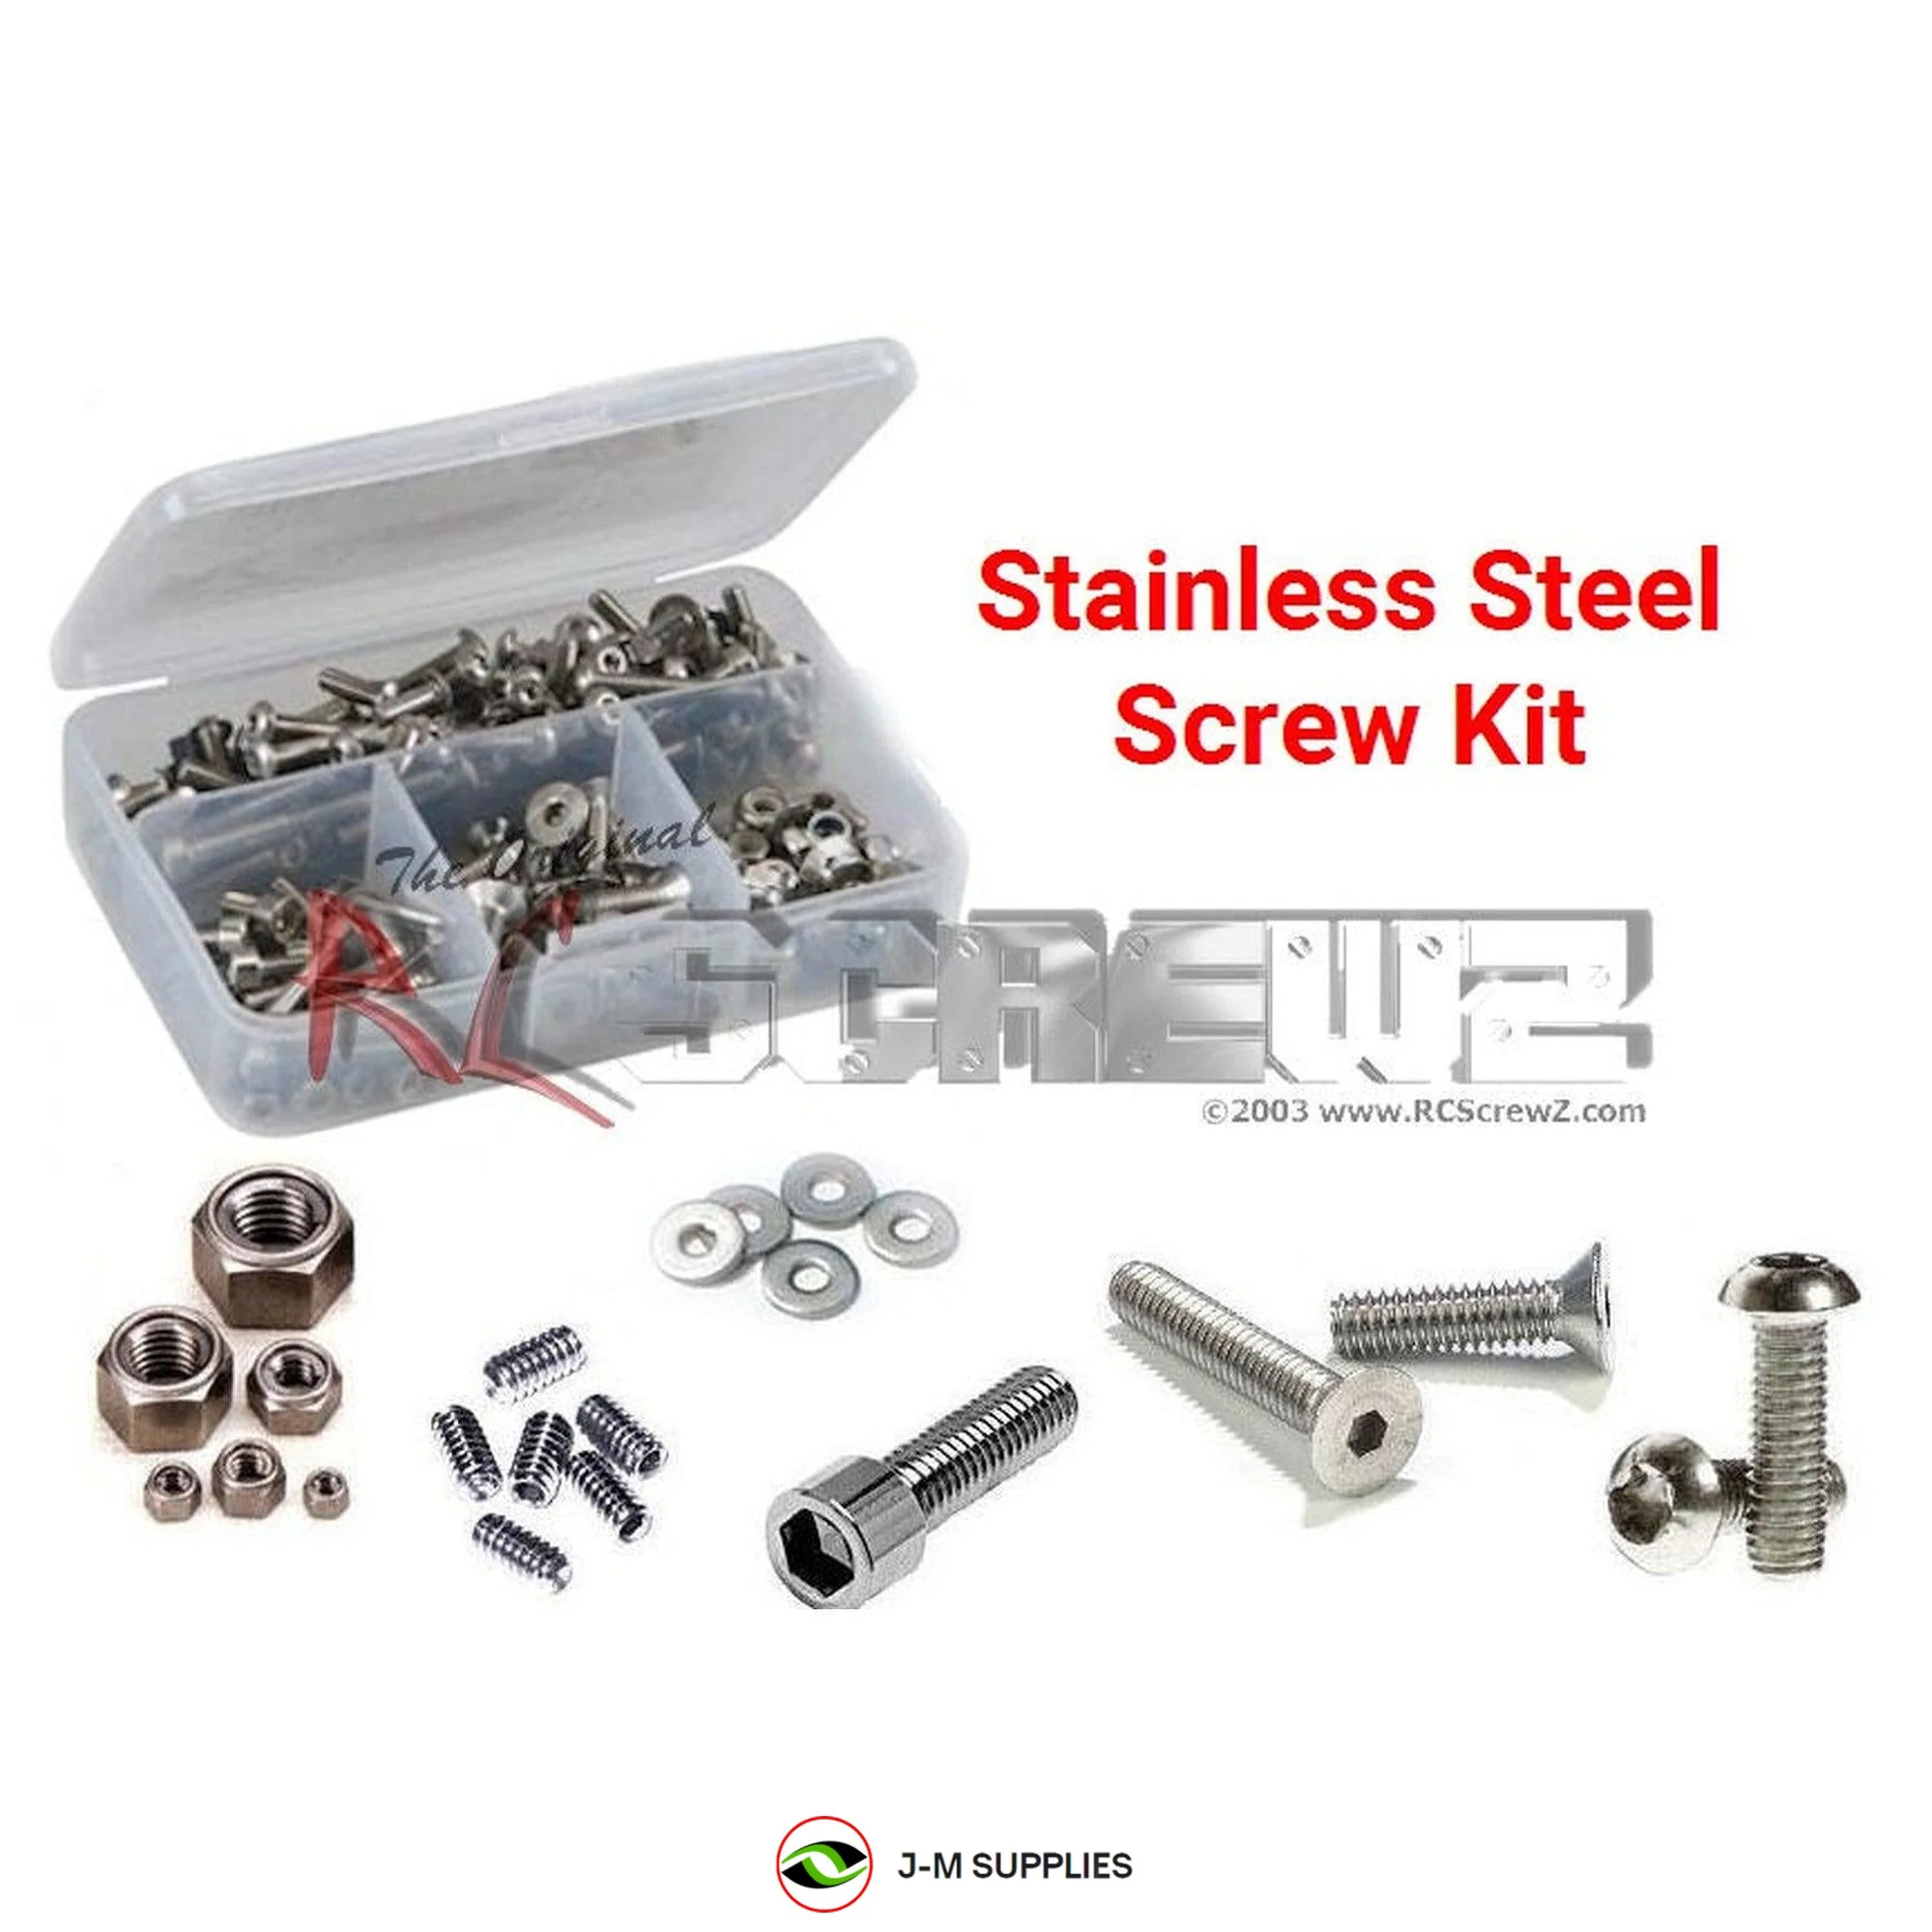 RCScrewZ Stainless Steel Screw Kit xra139 for Team XRAY XB808 2011 #350006 - Picture 1 of 12